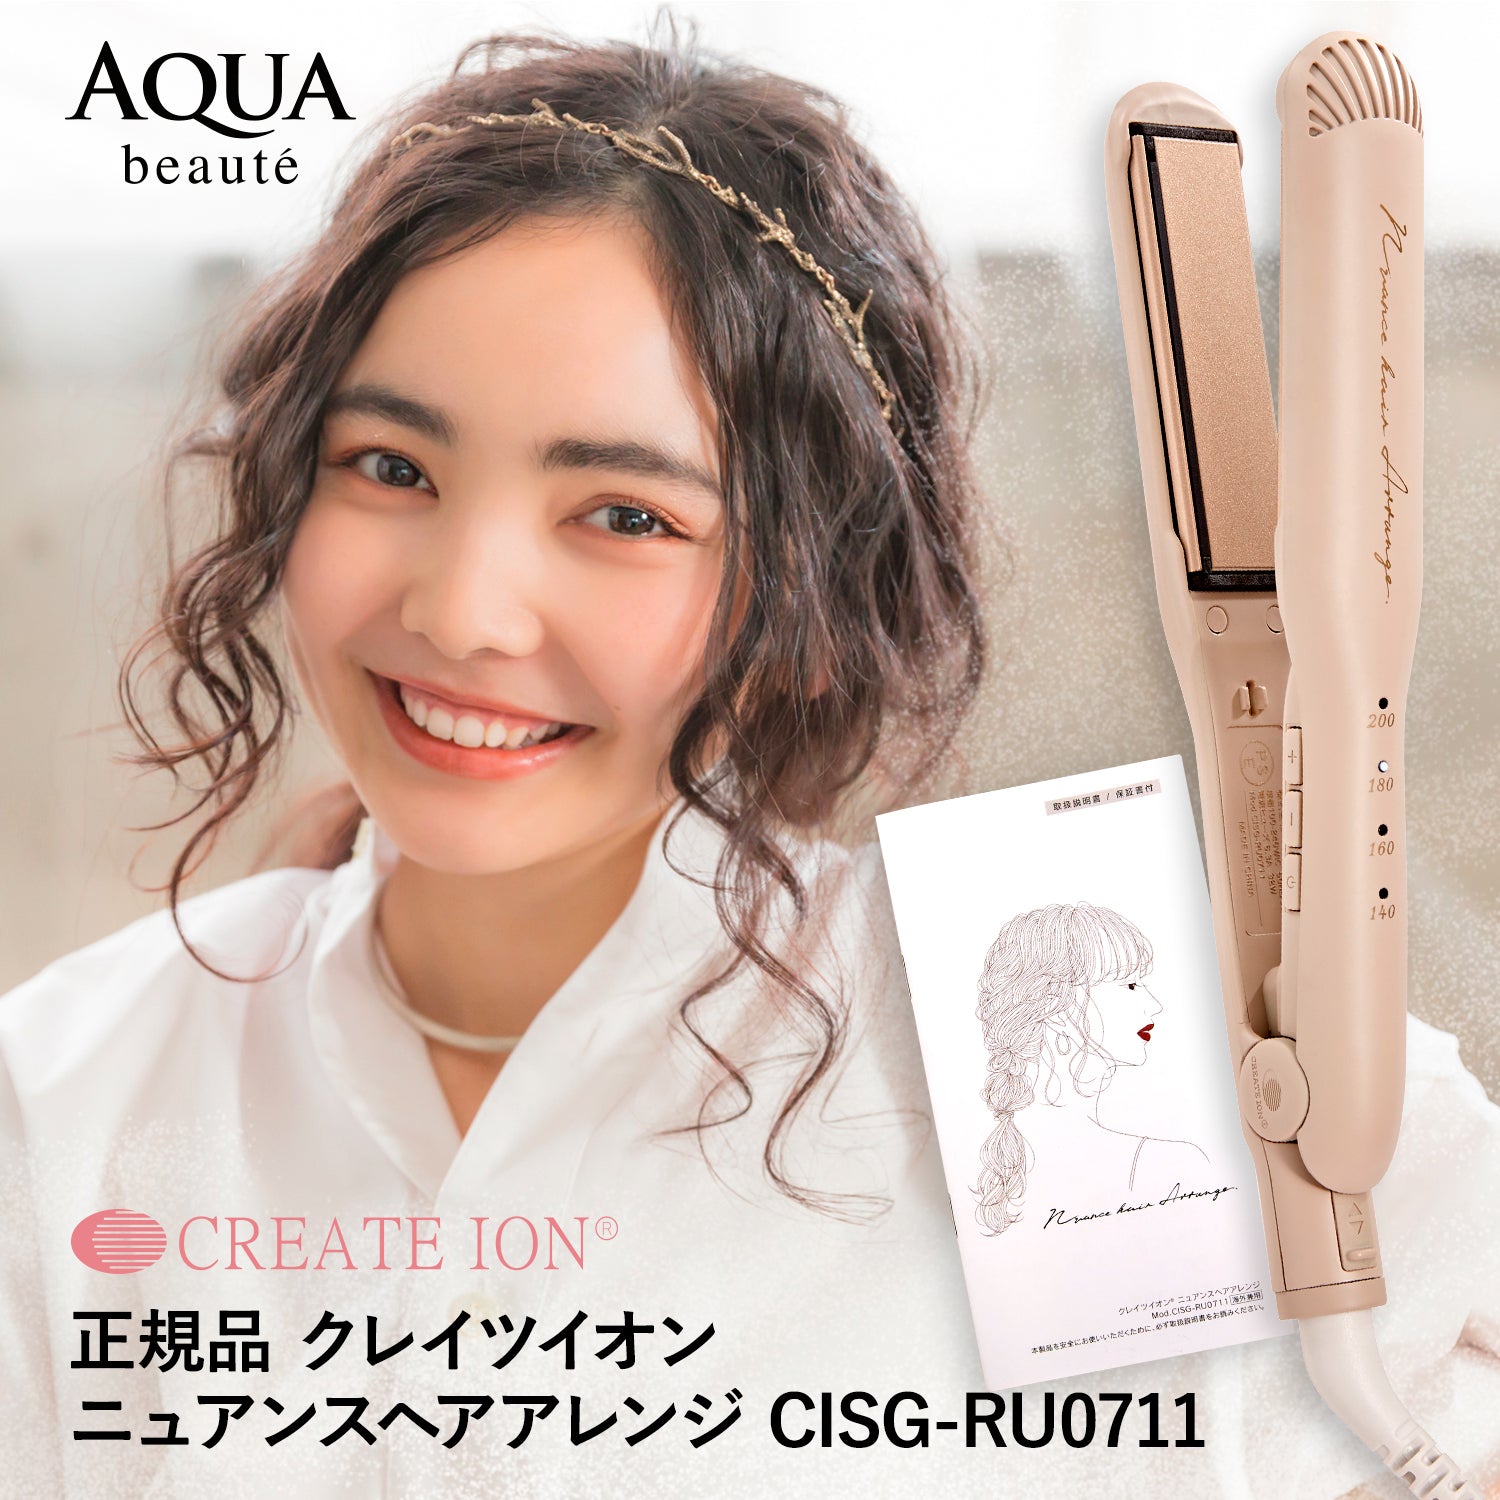 CREATE ION ニュアンスヘアアレンジ CISG-RU0711クレイツシリーズ名